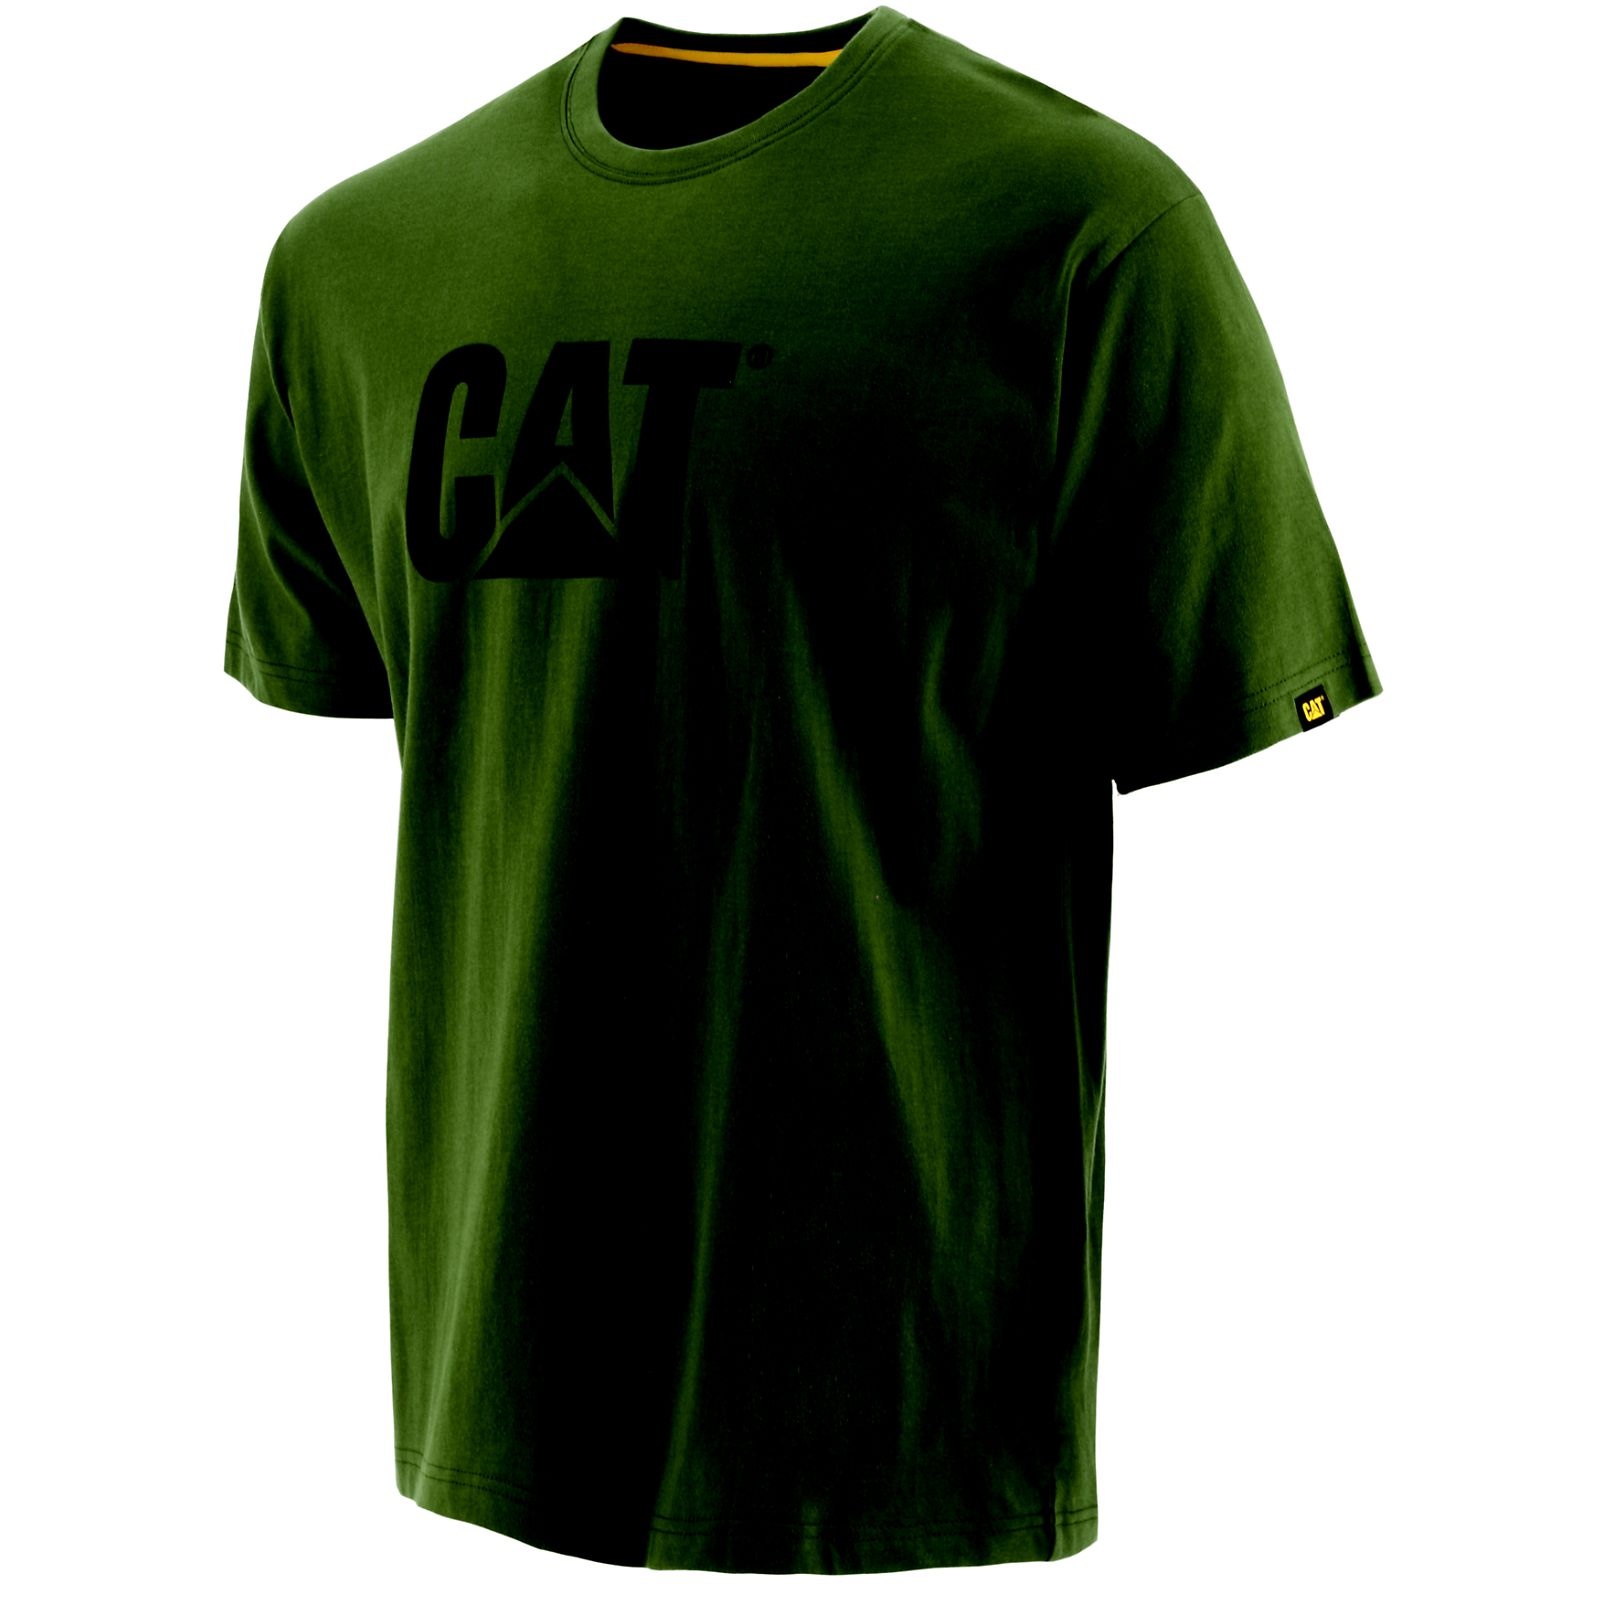 Caterpillar Clothing Sale Pakistan - Caterpillar Trademark Mens T-Shirts Green (397812-XGU)